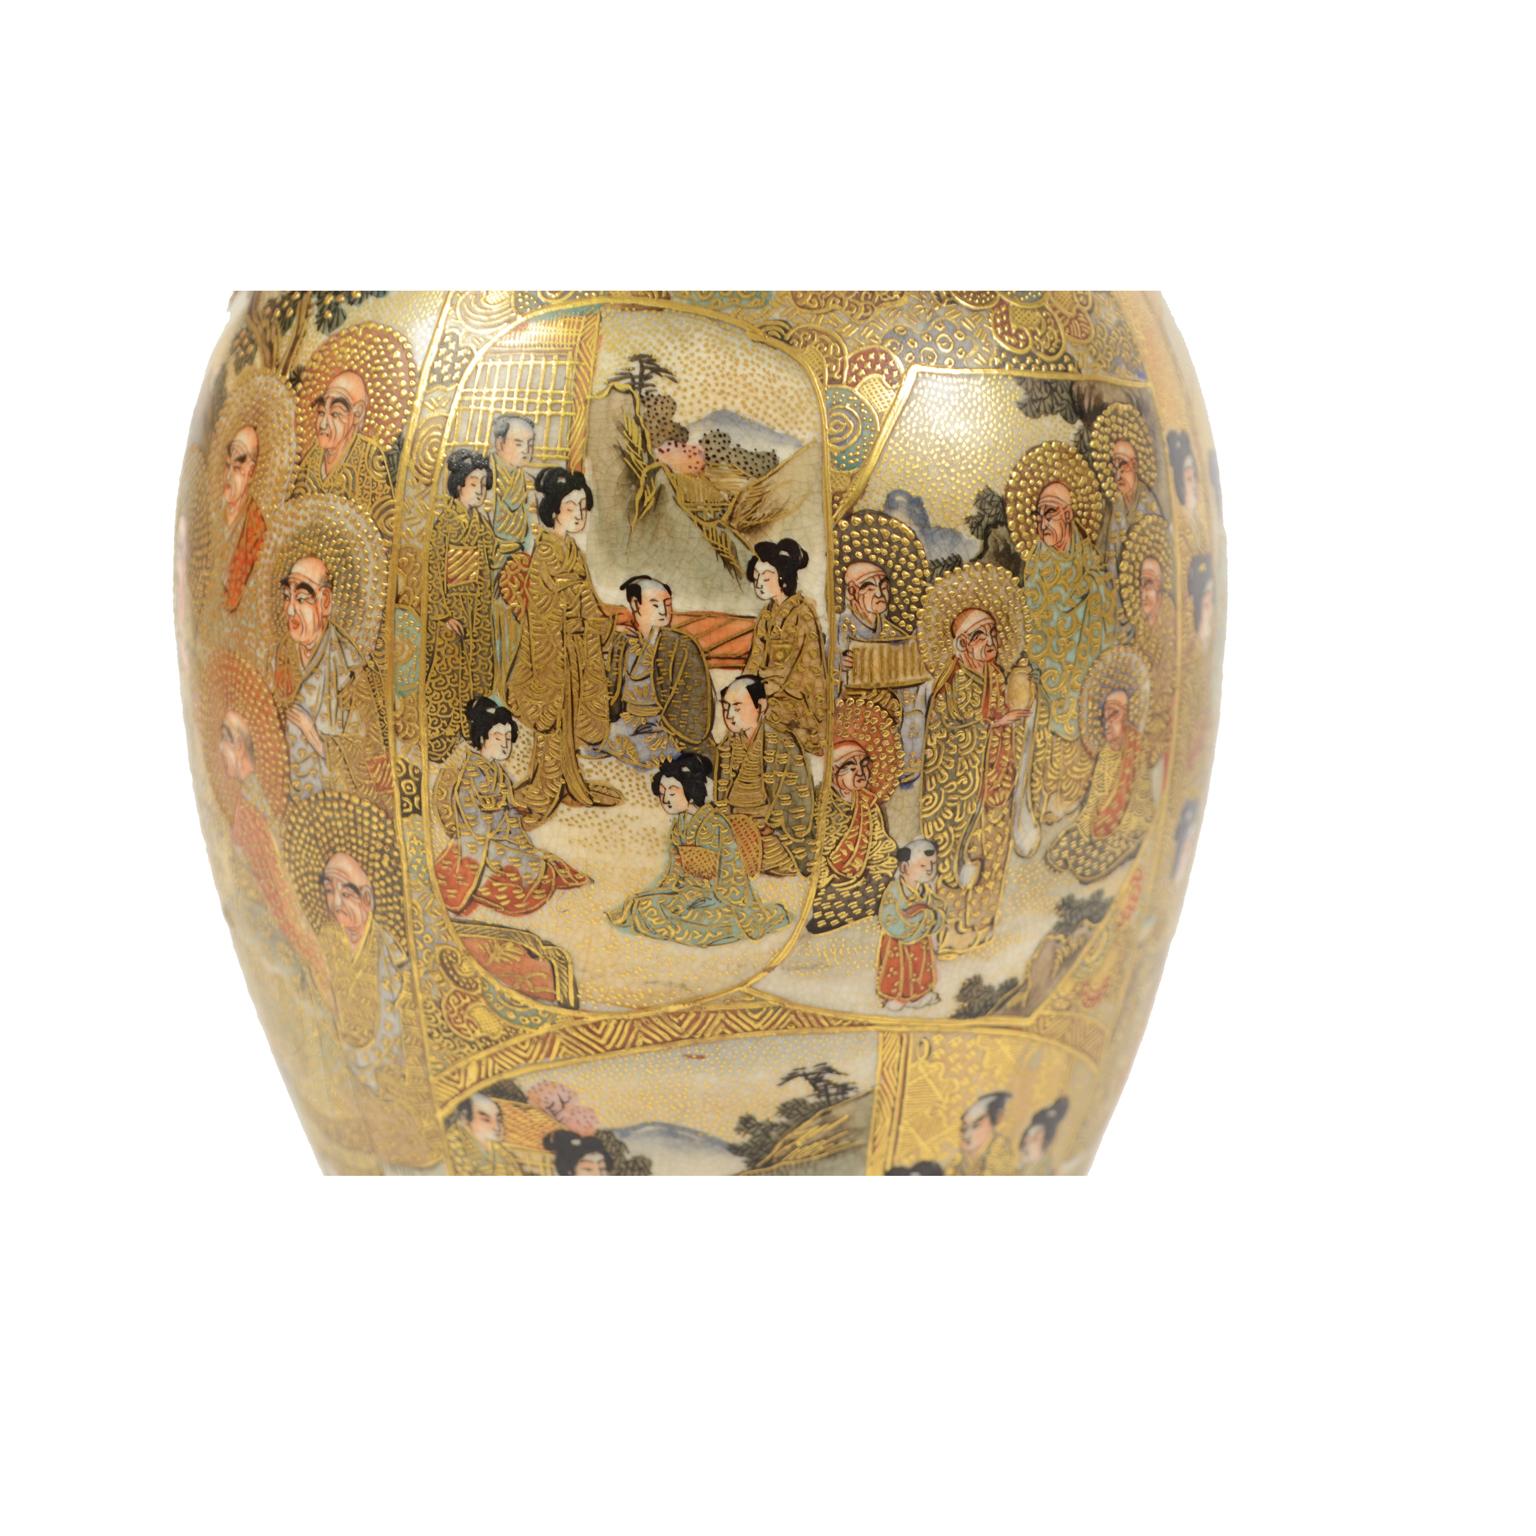 Pair of Japanese Ceramic Satsuma Vases with geishas and monks, 1875 circa 2